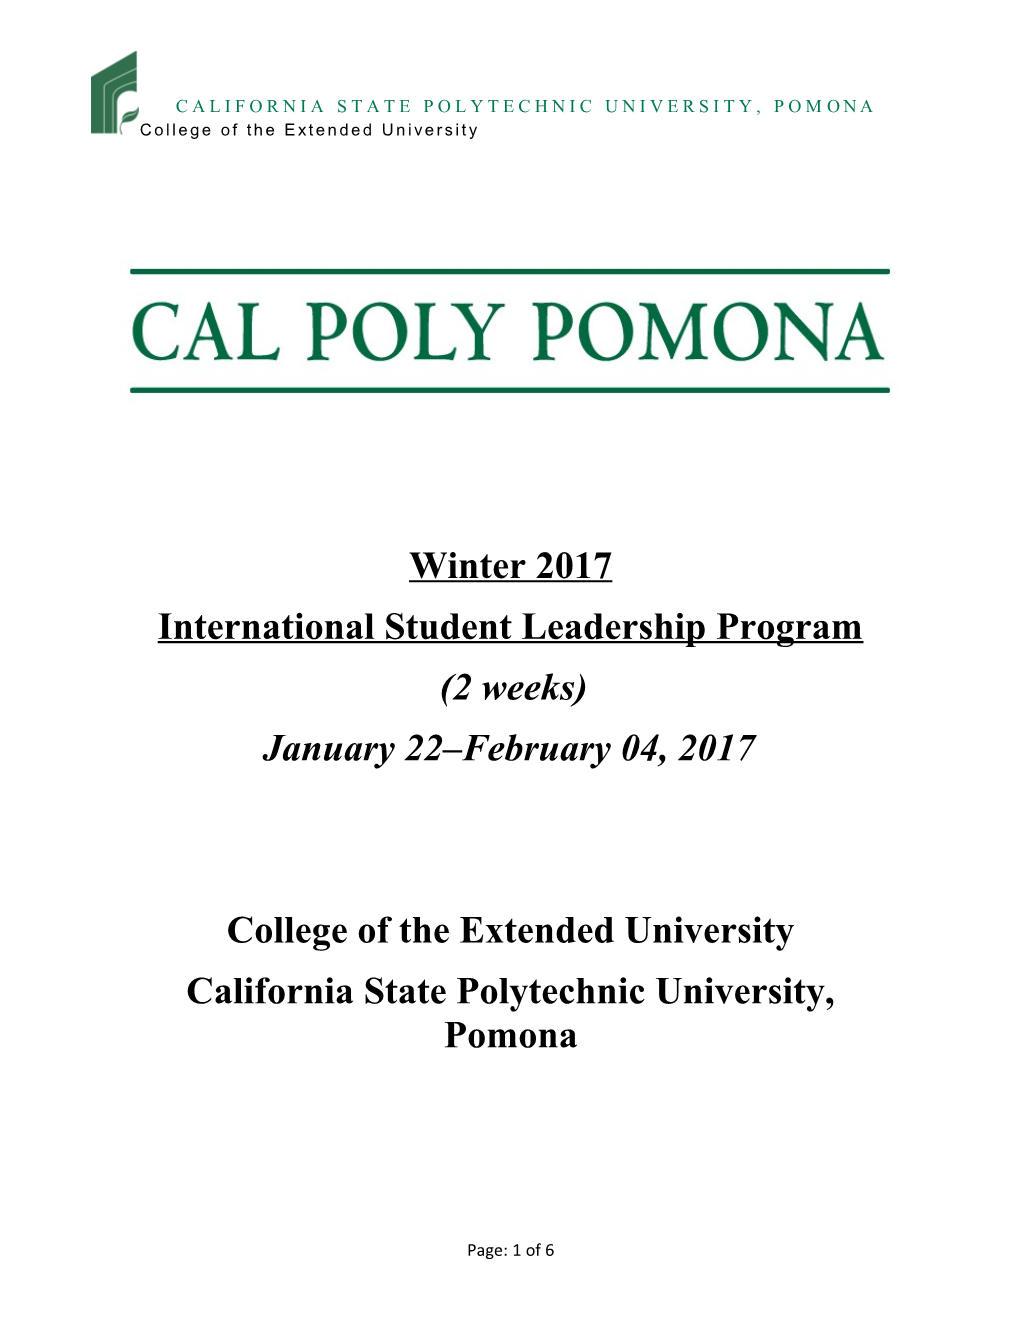 International Student Leadership Program